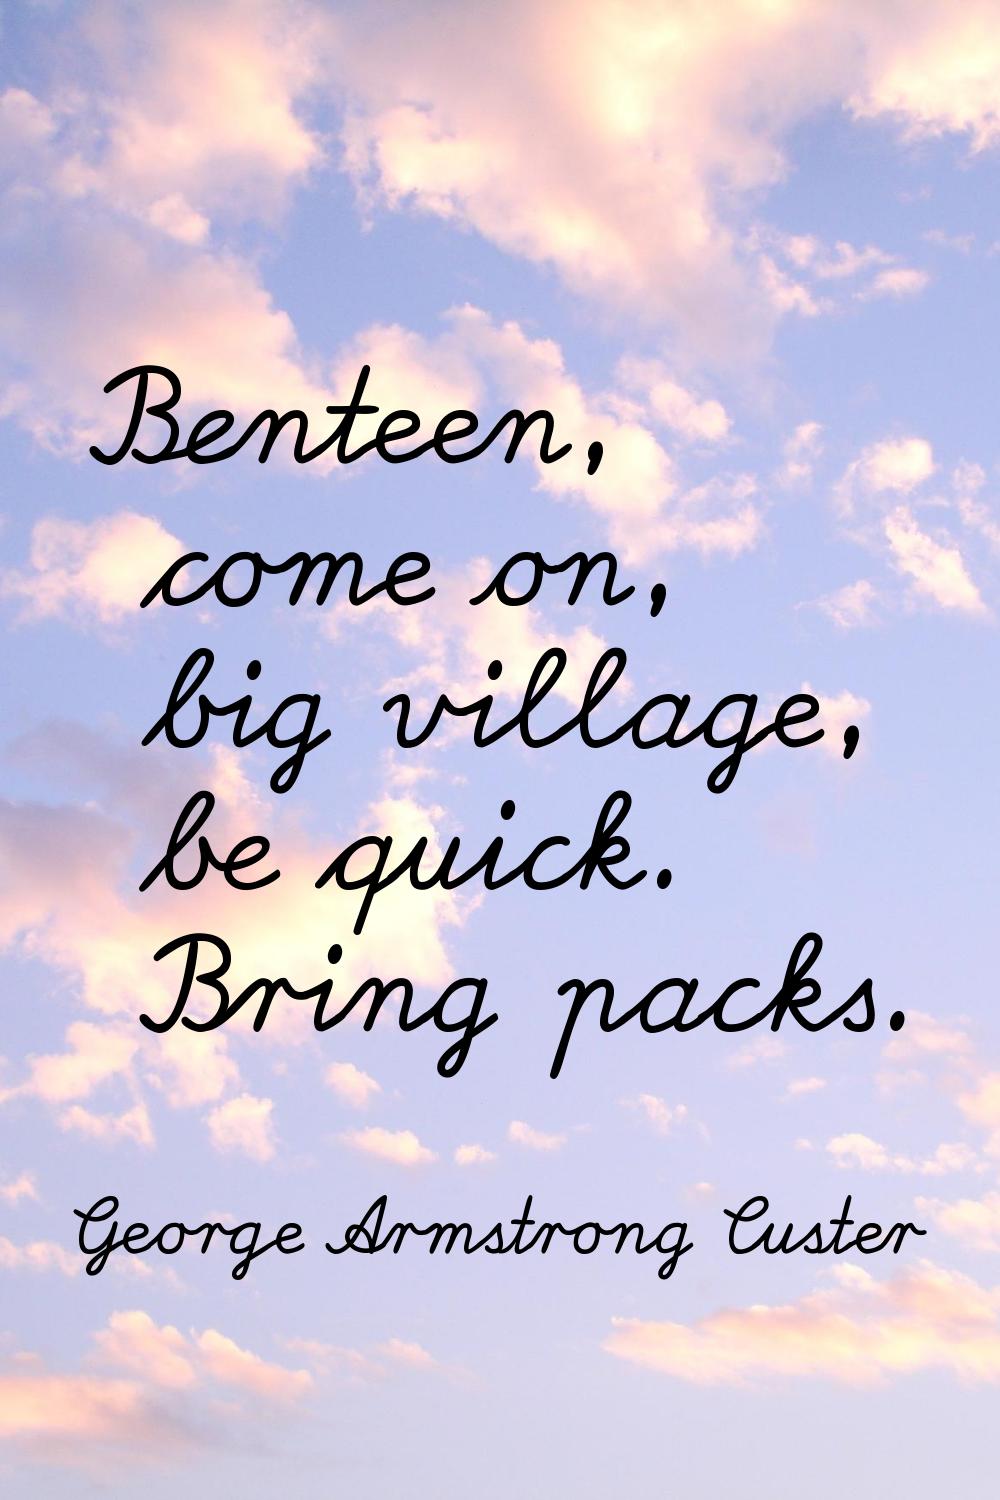 Benteen, come on, big village, be quick. Bring packs.